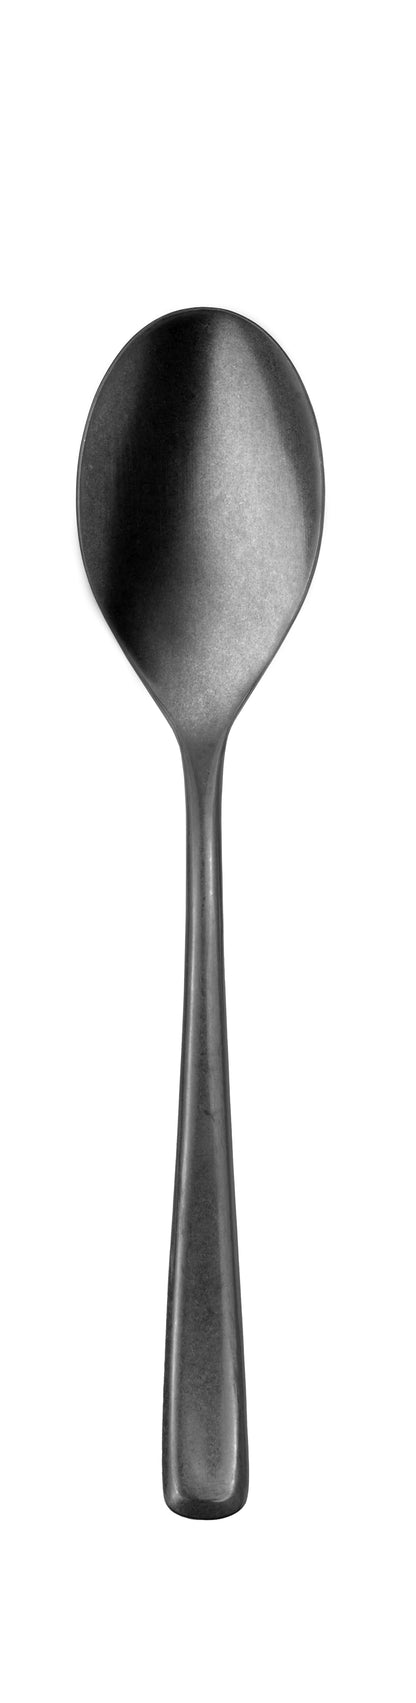 Table spoon WHILE PVD gun metal stone